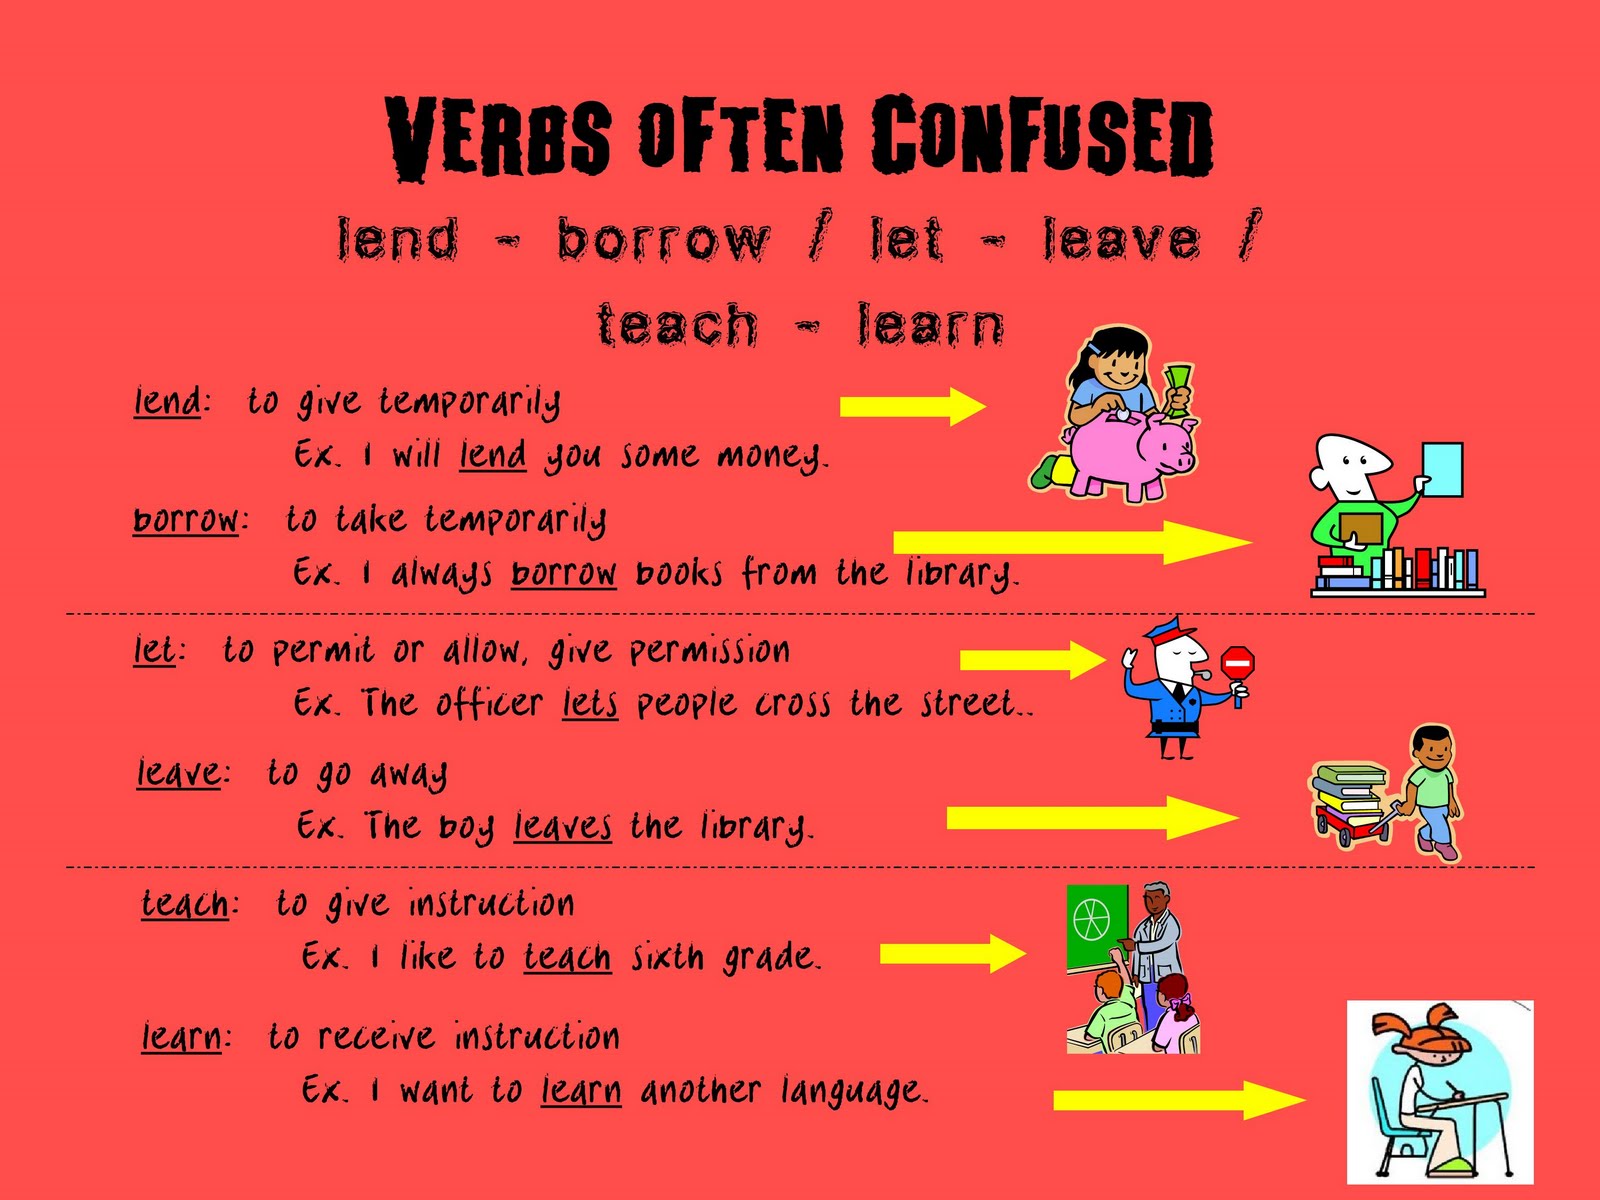 6th-grade-verbs-often-confused